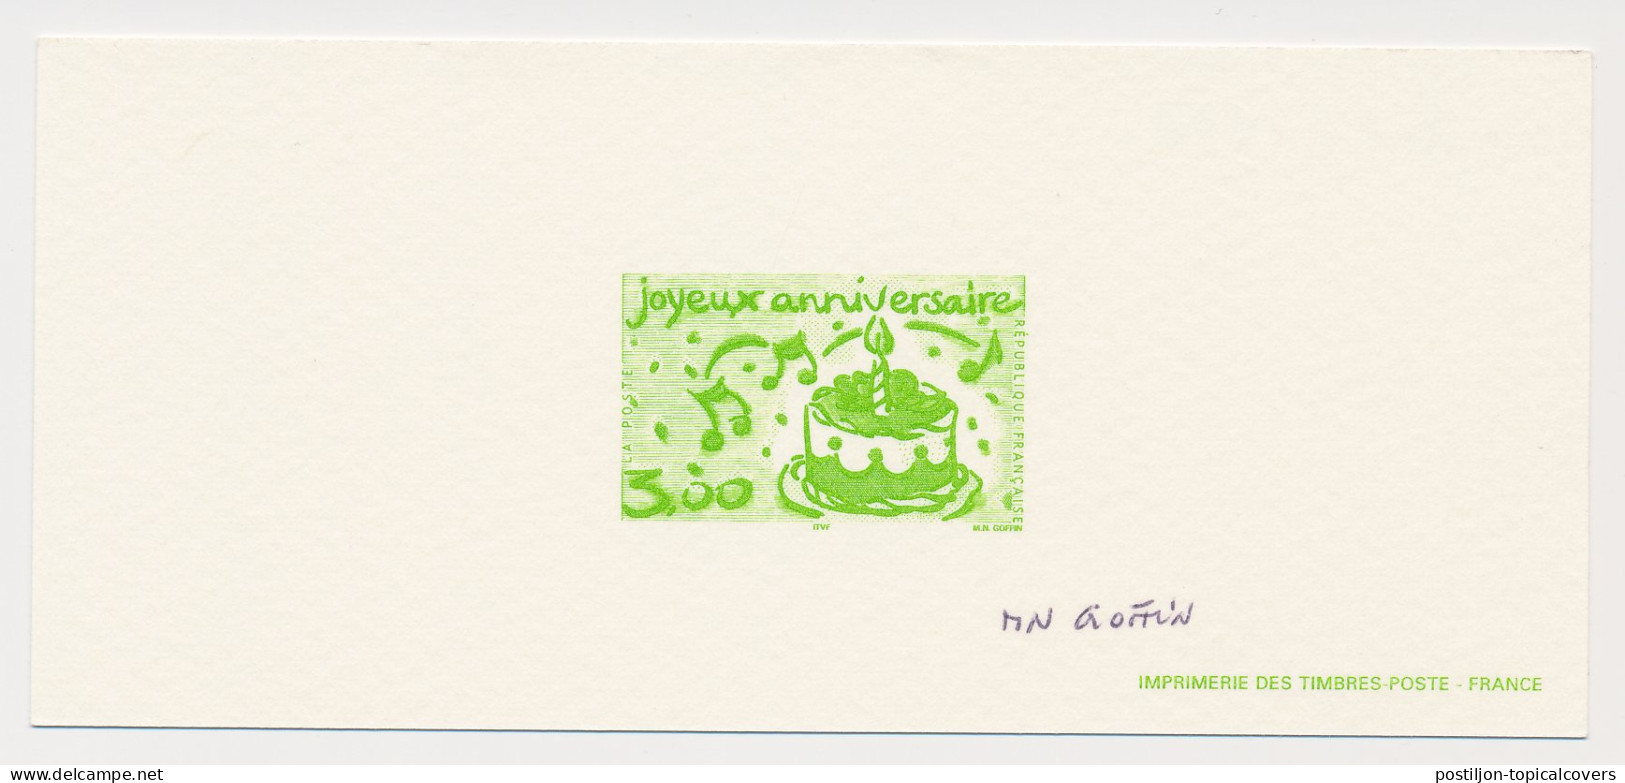 France 1999 - Epreuve / Proof Signed By Engraver Pie - Birthday - Anniversary - Levensmiddelen